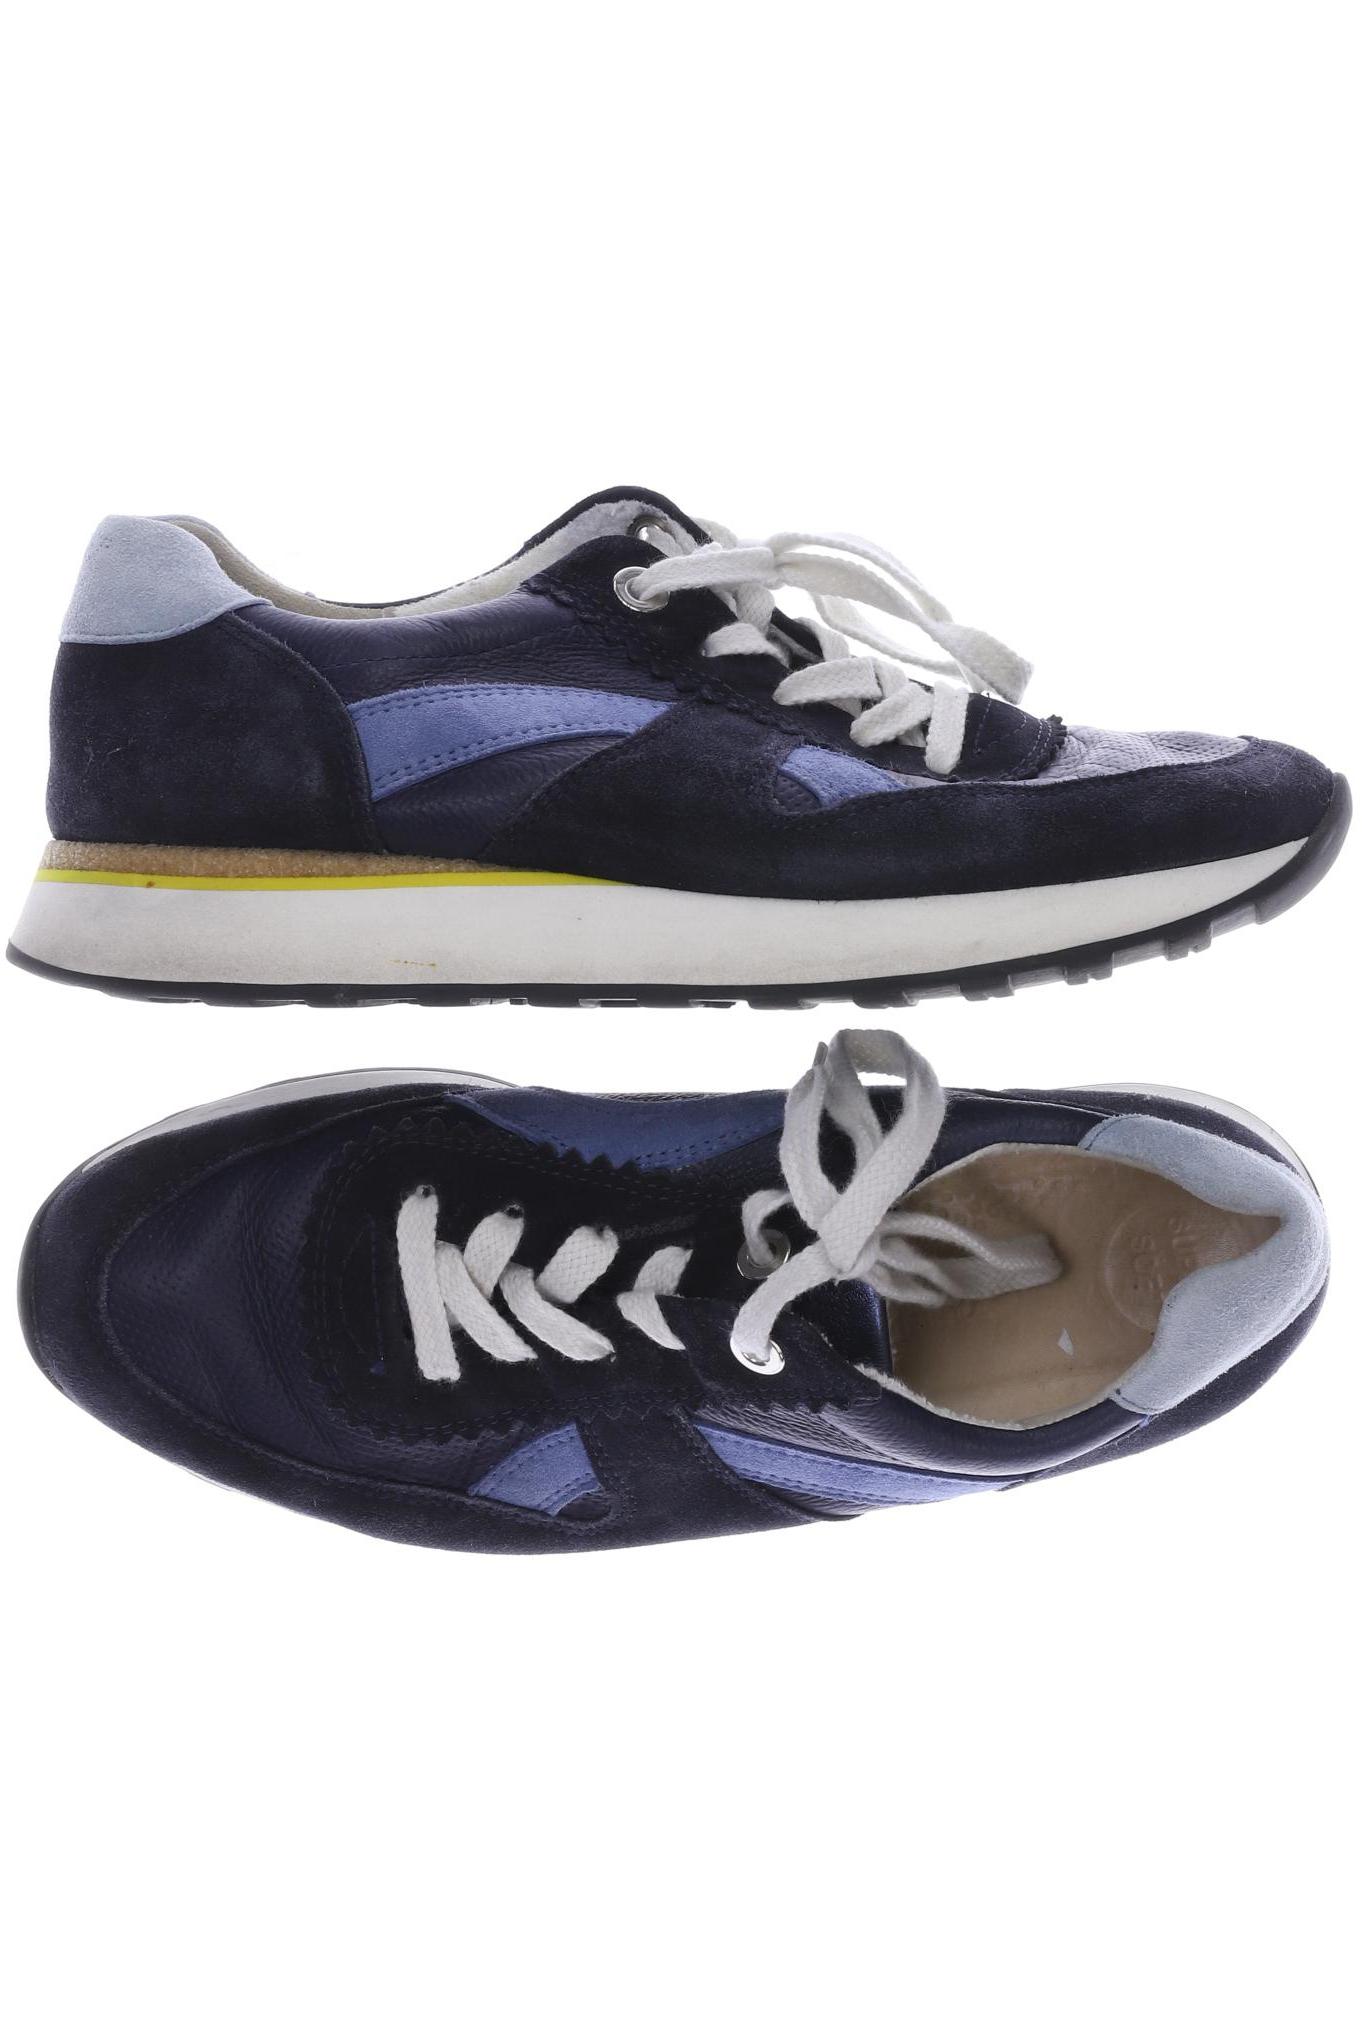 Paul Green Damen Sneakers, marineblau, Gr. 5.5 von Paul Green